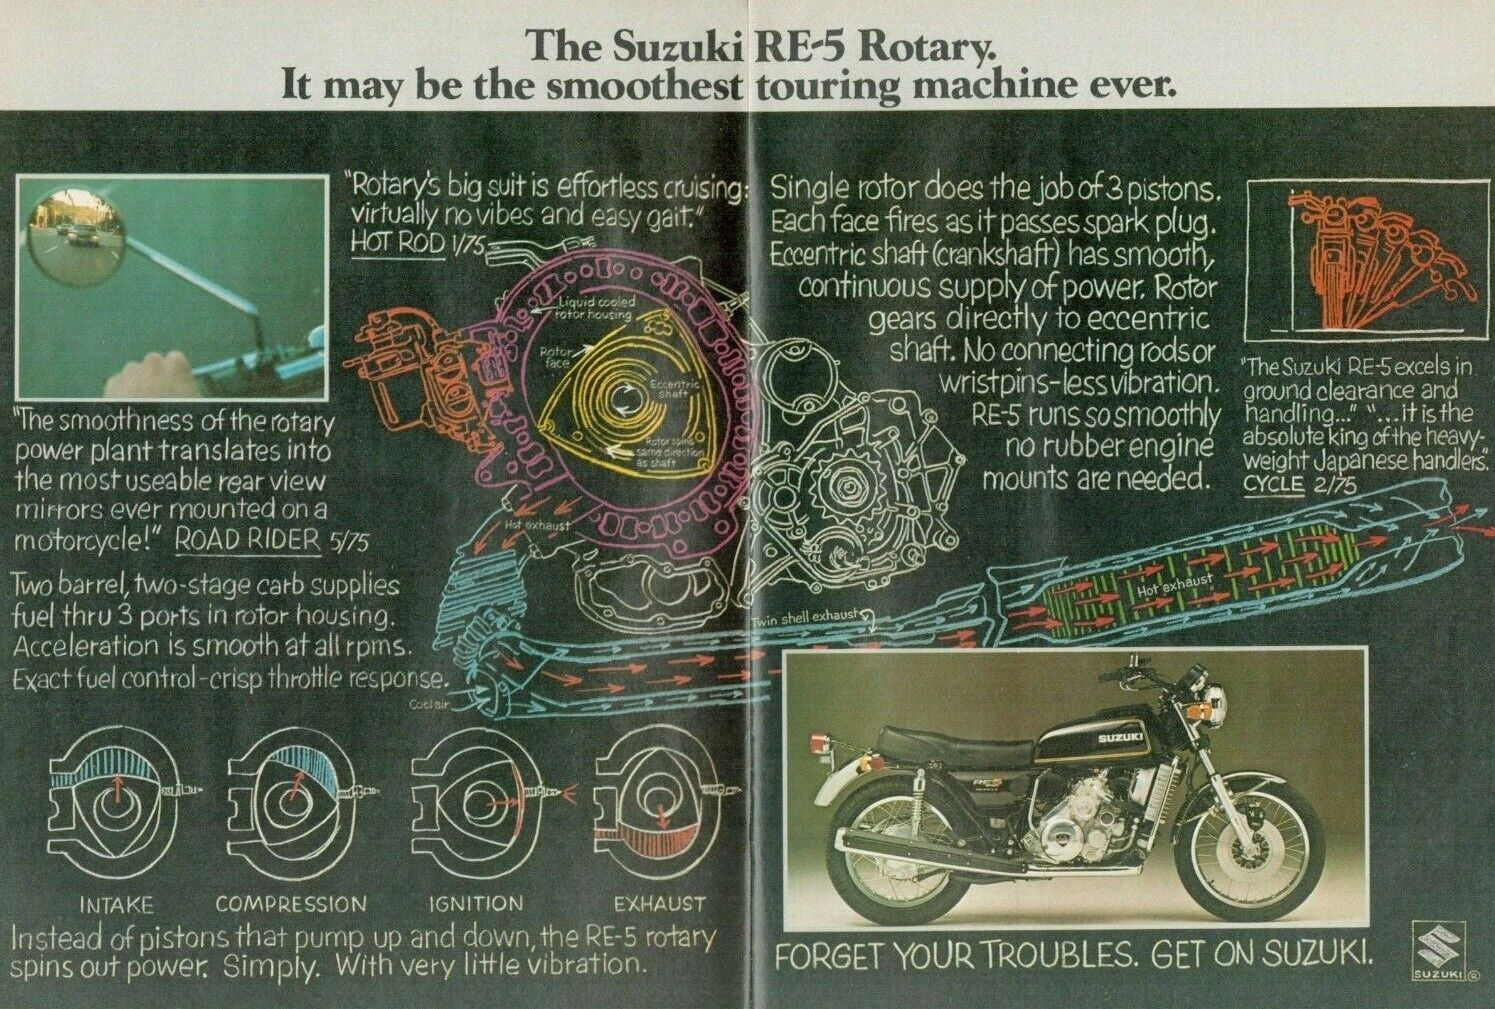 1976 Suzuki Re-5 Rotary - 2-page Vintage Motorcycle Advertisement